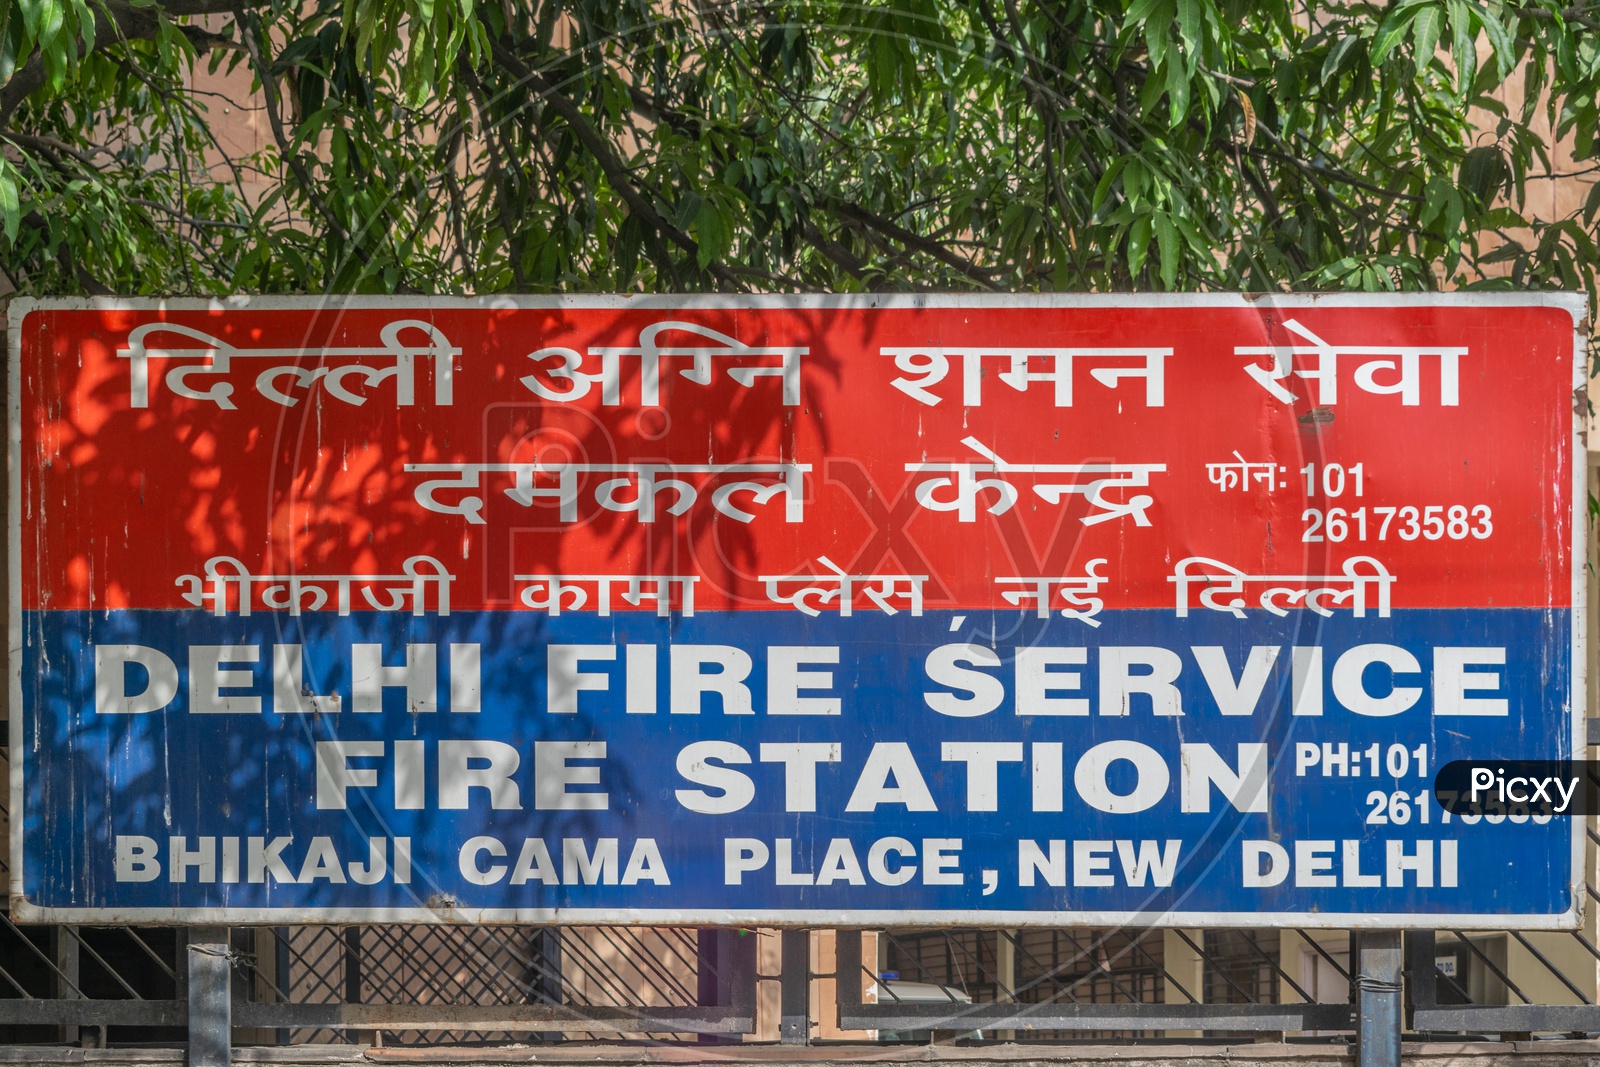 Delhi Fire Service Fire Station